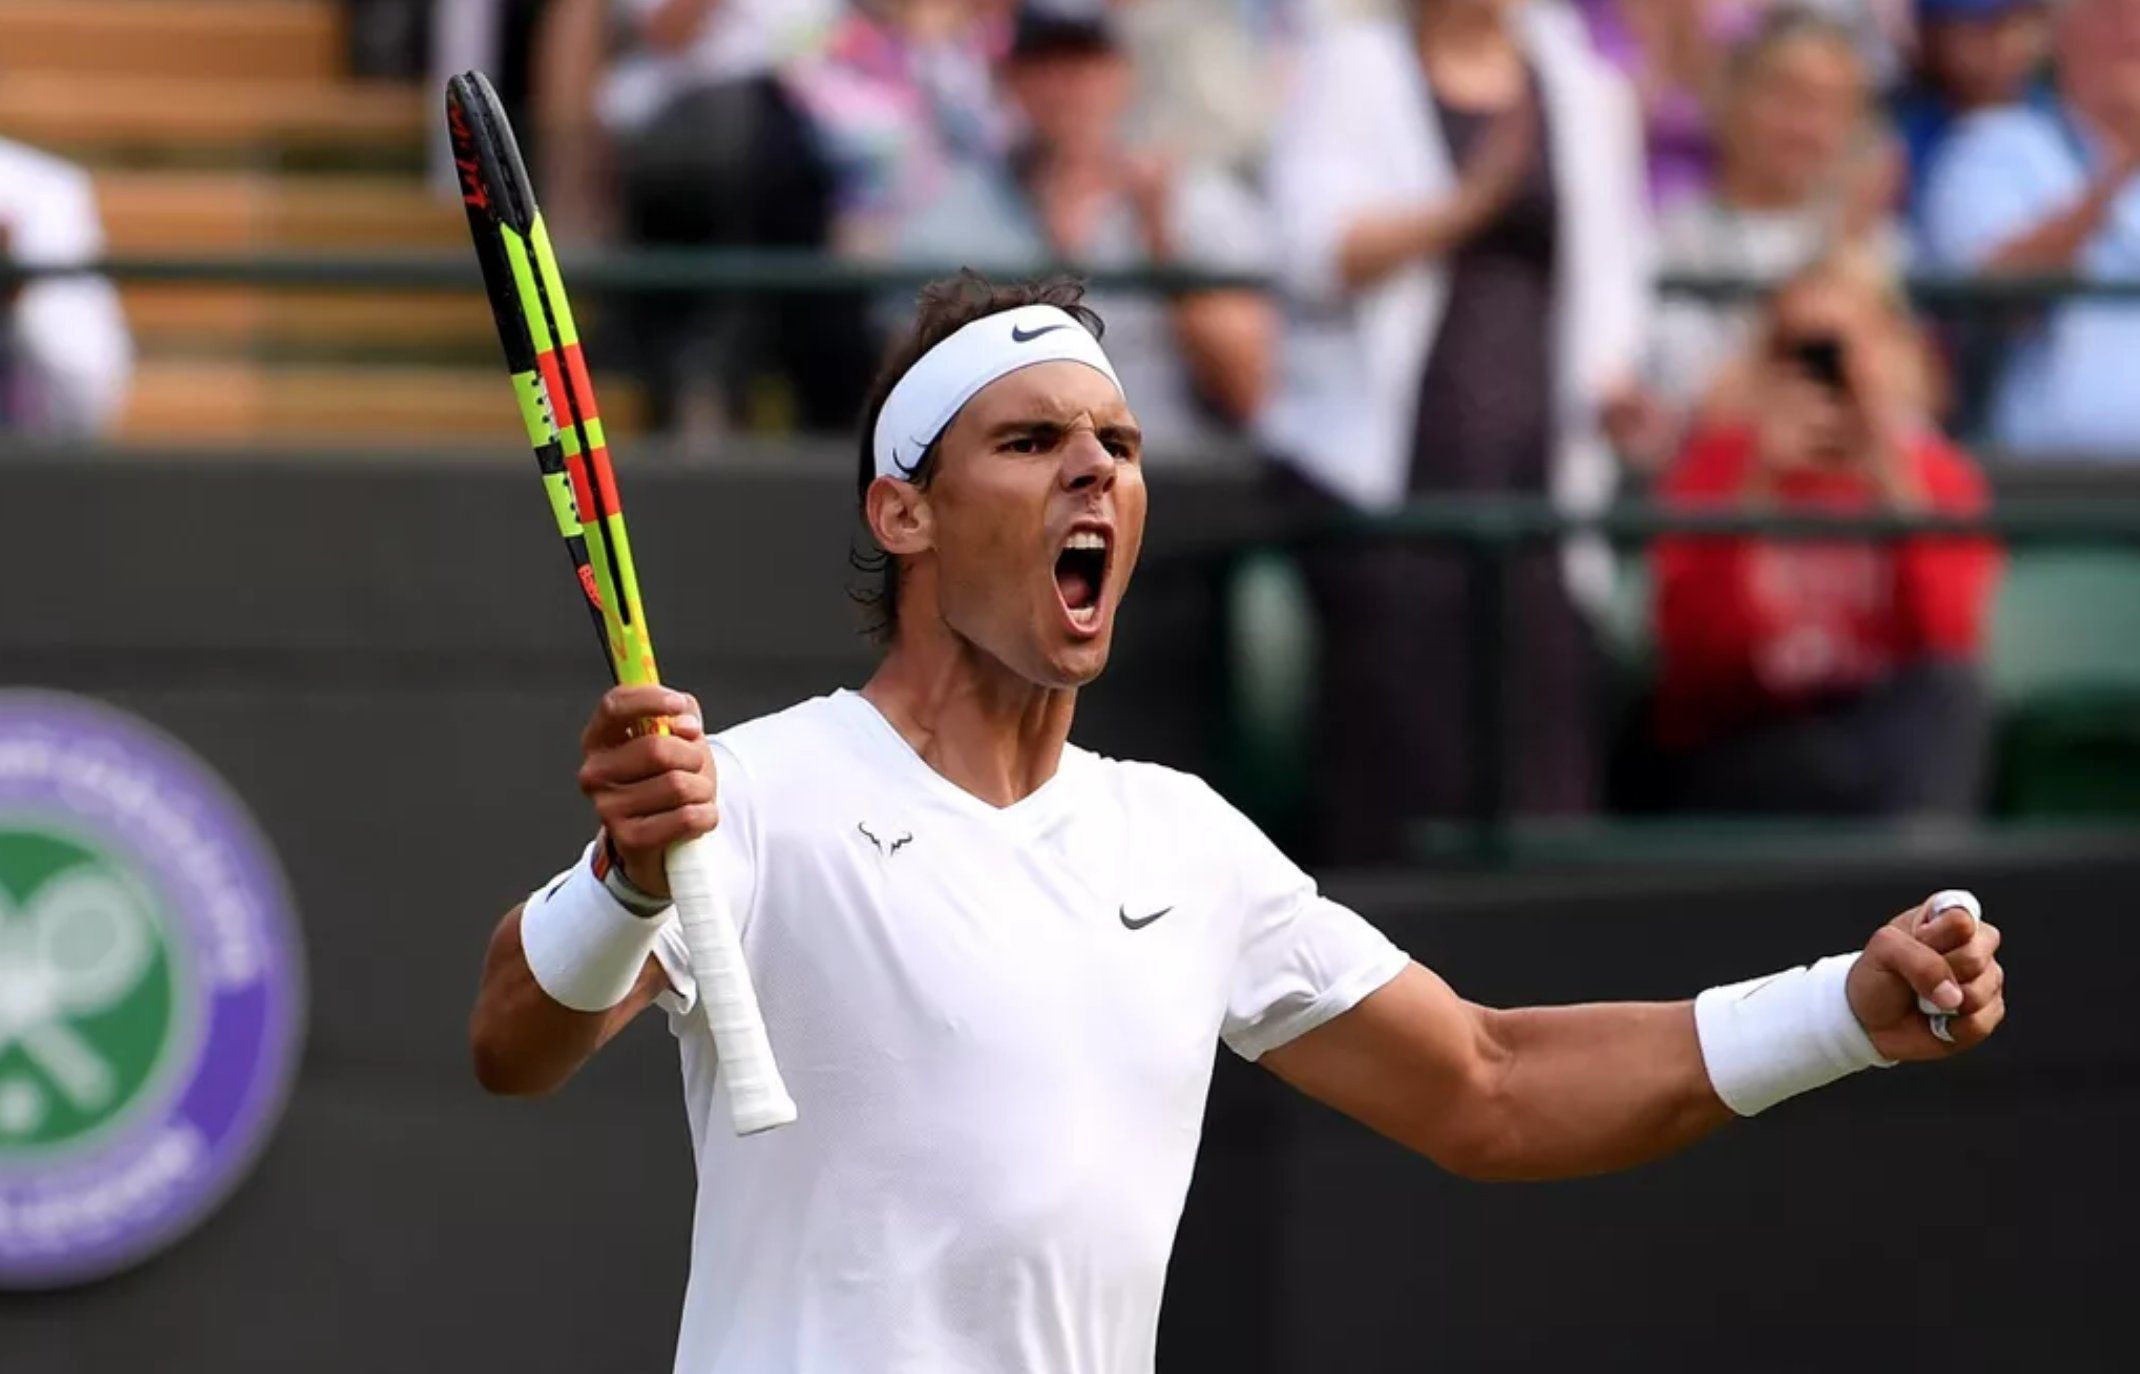 Wimbledon 2022 Match Result: Rafael Nadal vs Francisco Cerundolo: Nadal wins (6-4, 6-3, 3-6, 6-4)